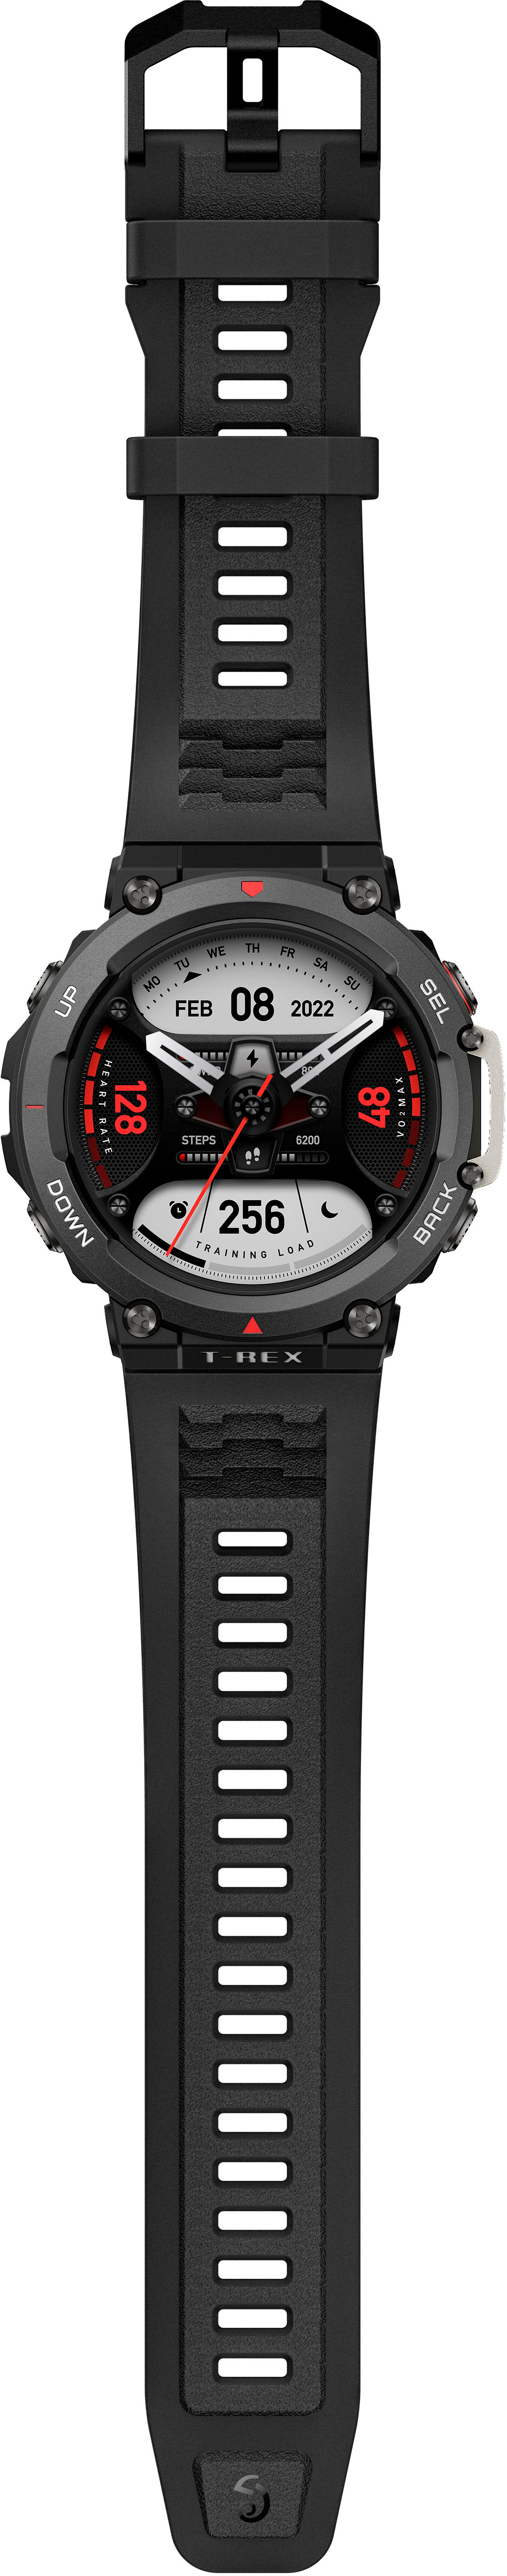 Back View: Amazfit - T-Rex 2 Outdoor Smartwatch 35.3 mm - Ember Black